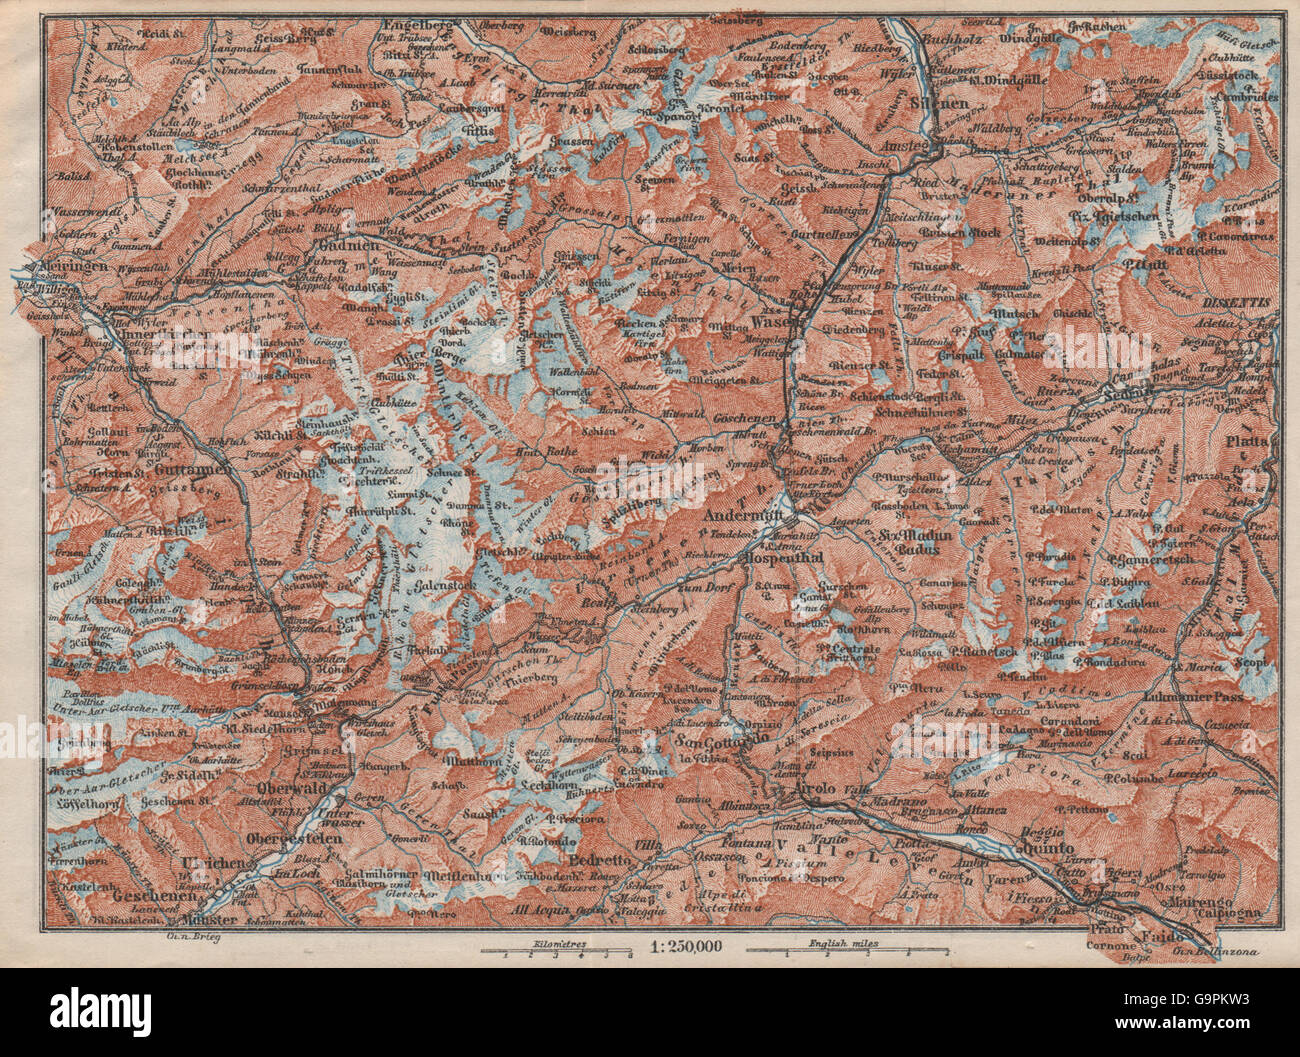 ST GOTTHARD area. Andermatt Engelberg Silenen Gadmen Ulrichen Disentis, 1897 map Stock Photo